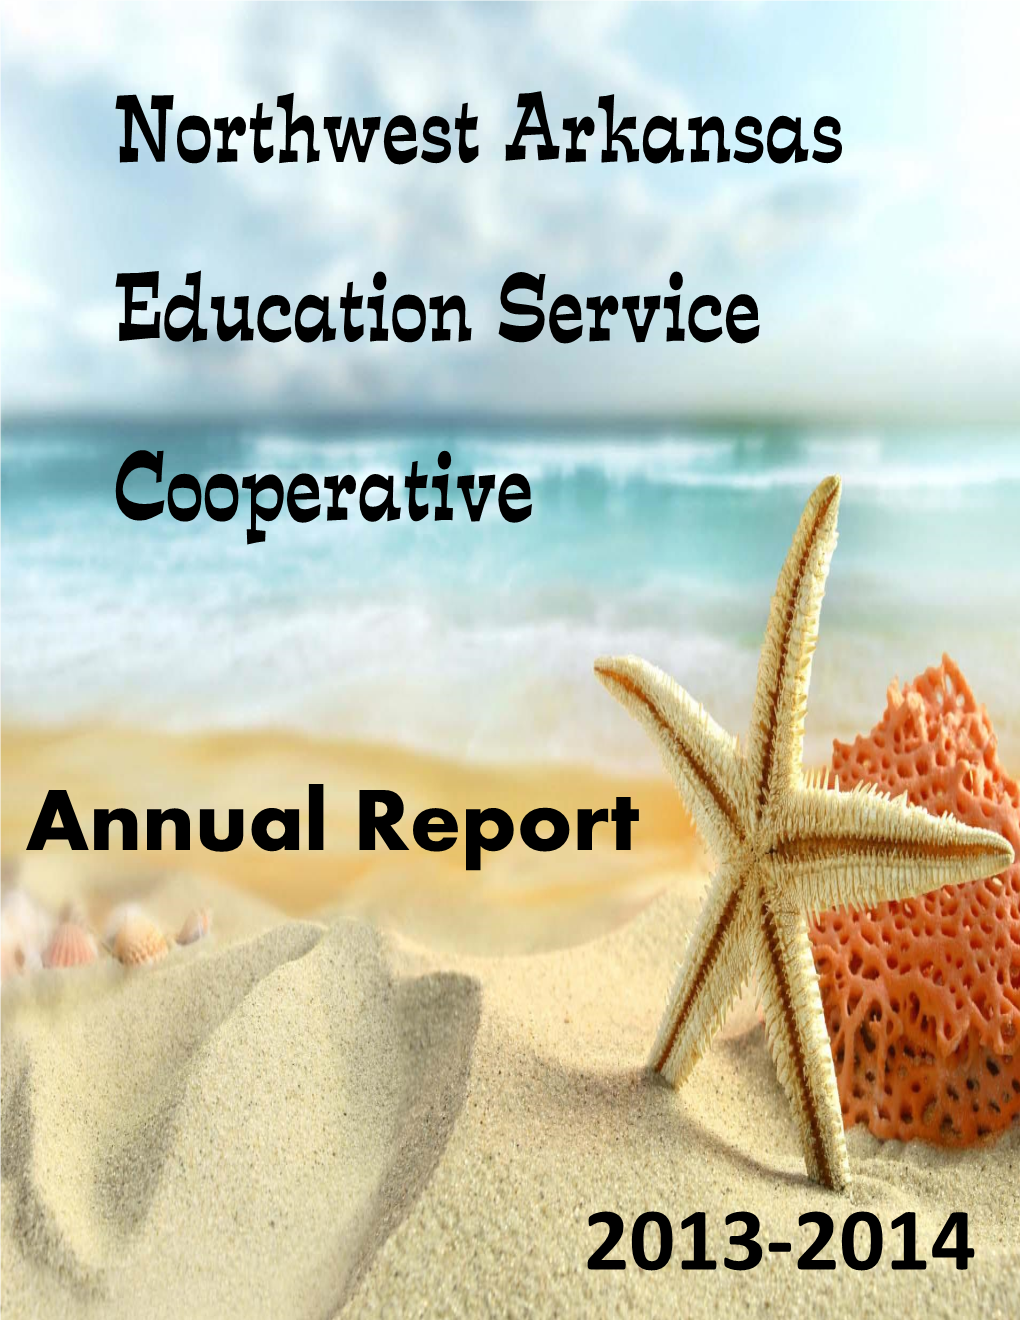 Northwest Arkansas Education Service Cooperative Annual Report 2013-2014